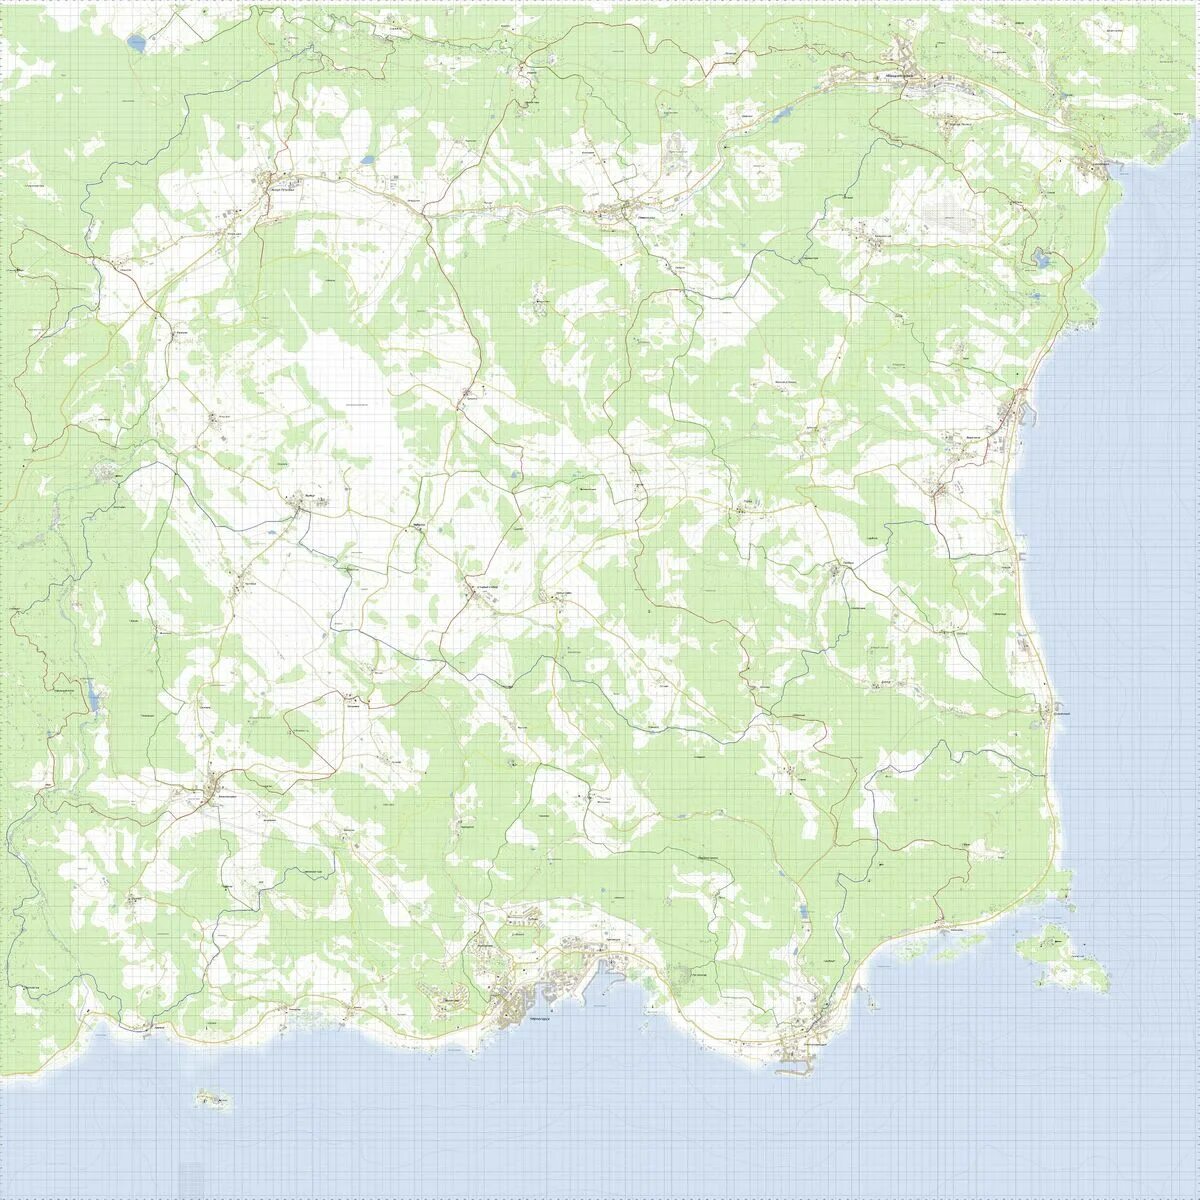 Dayz livonia map. Карта DAYZ Черноруссия. DAYZ Standalone Черноруссия. Карта Черноруссия DAYZ Черноруссия.